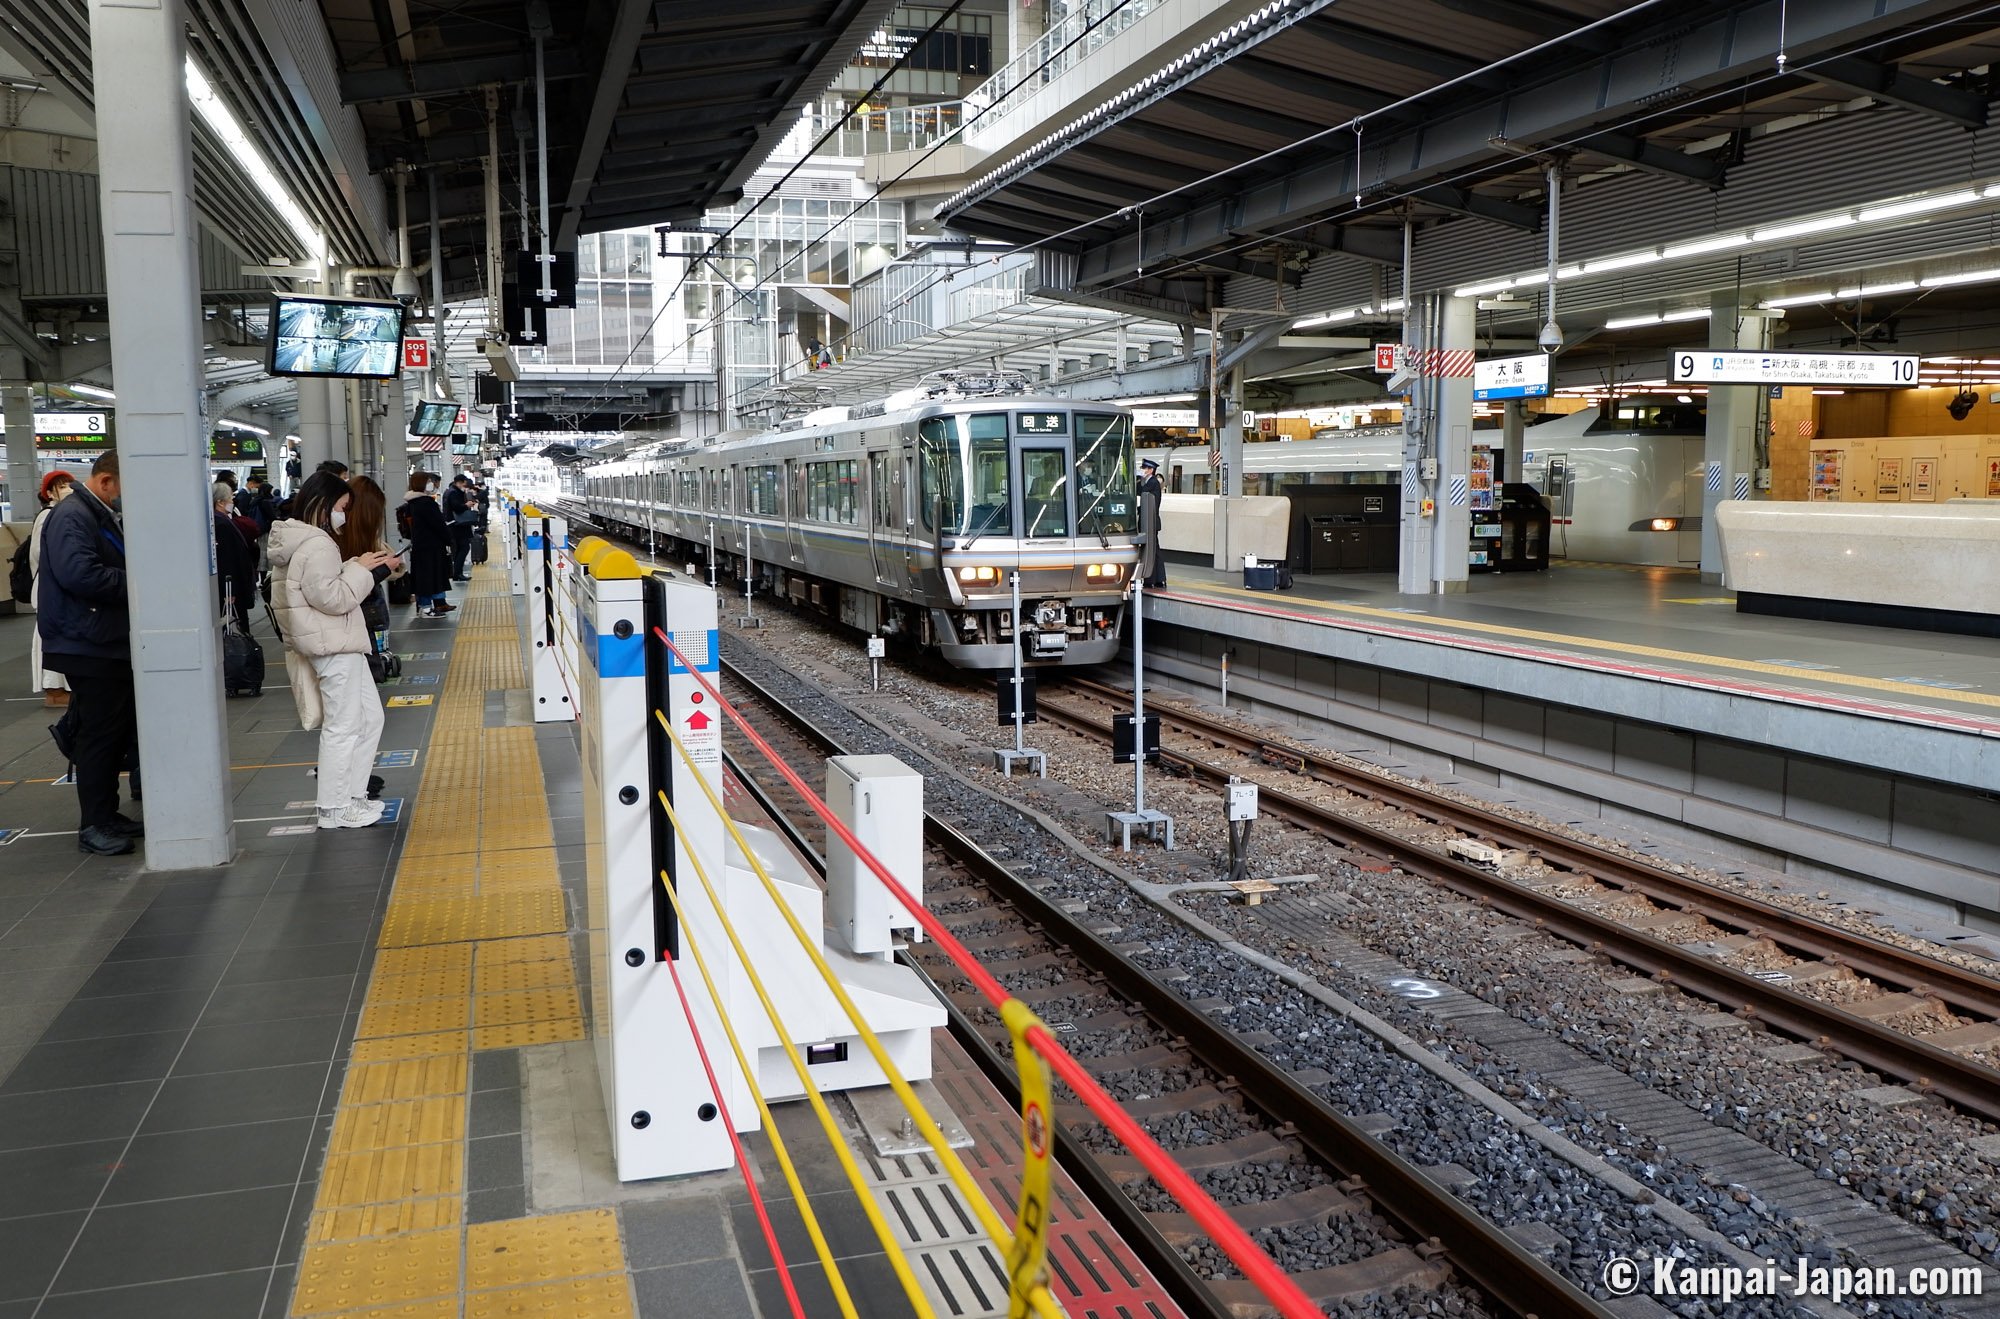 The Kyoto-Osaka Journey